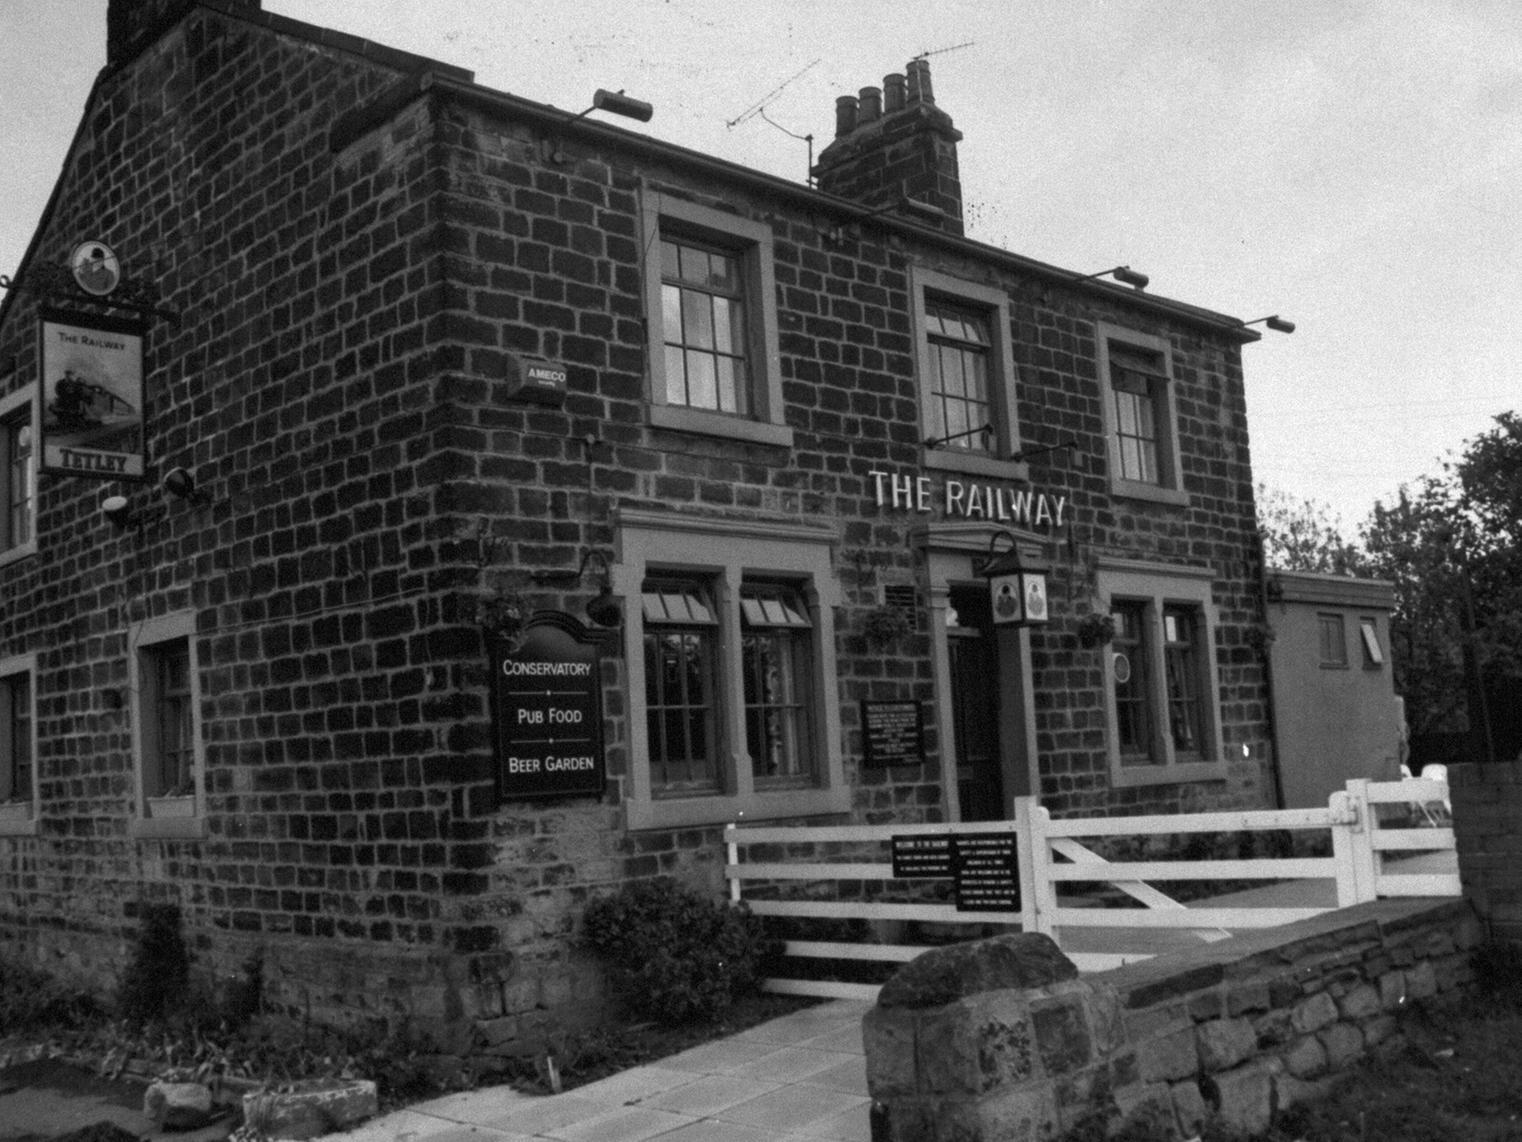 The Railway pub at Calverley Bridge. Pictured in July 1990.